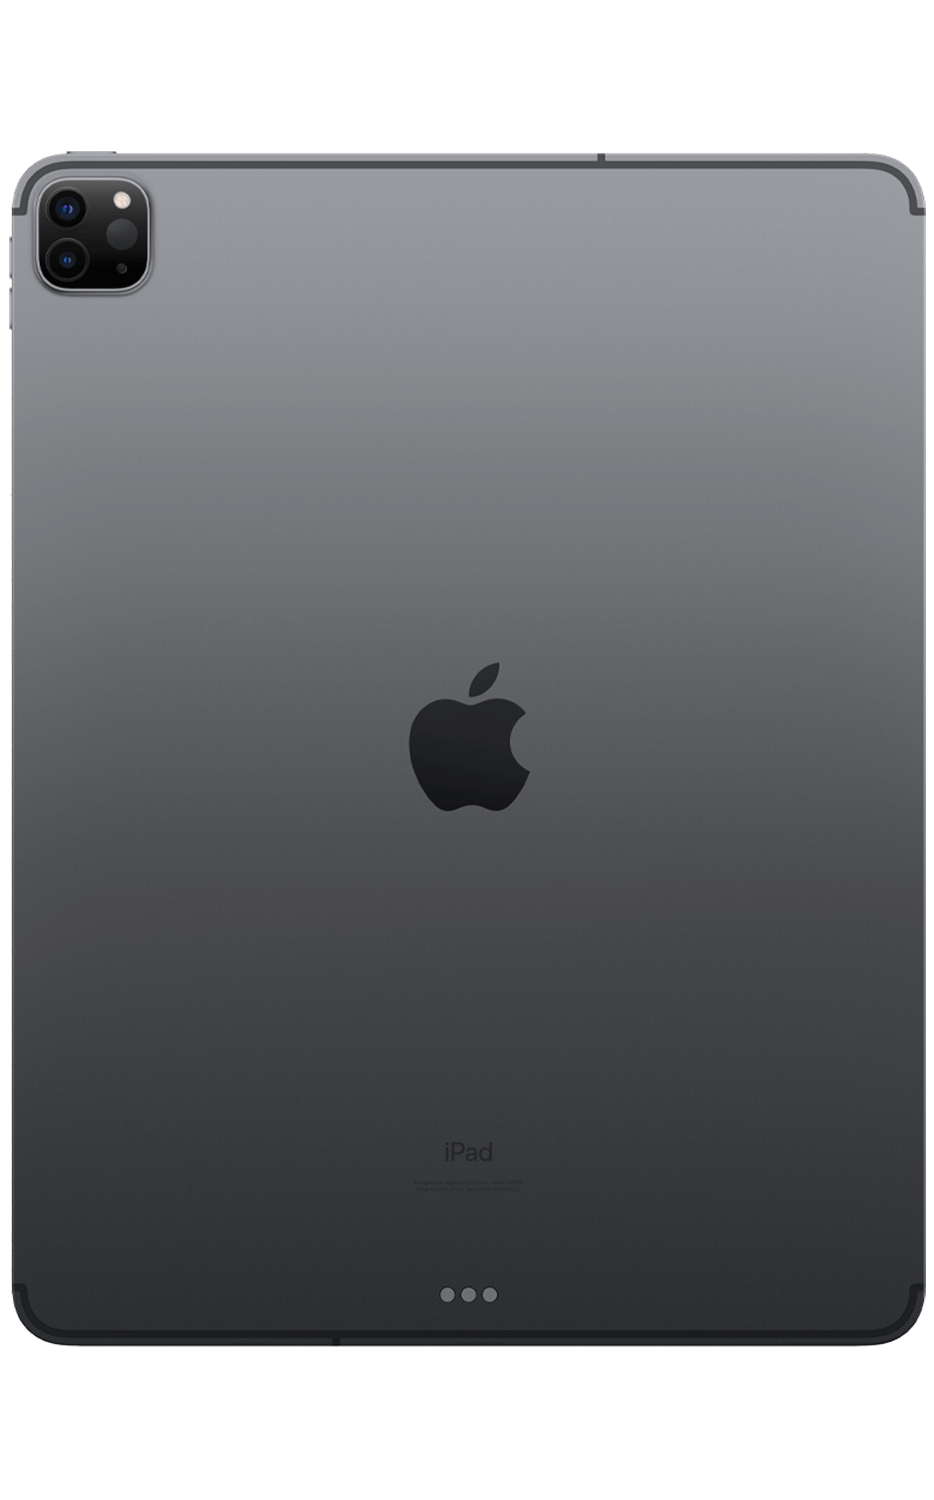 iPad Pro 12.9 (4th Generation) Power/Lock Button Repair